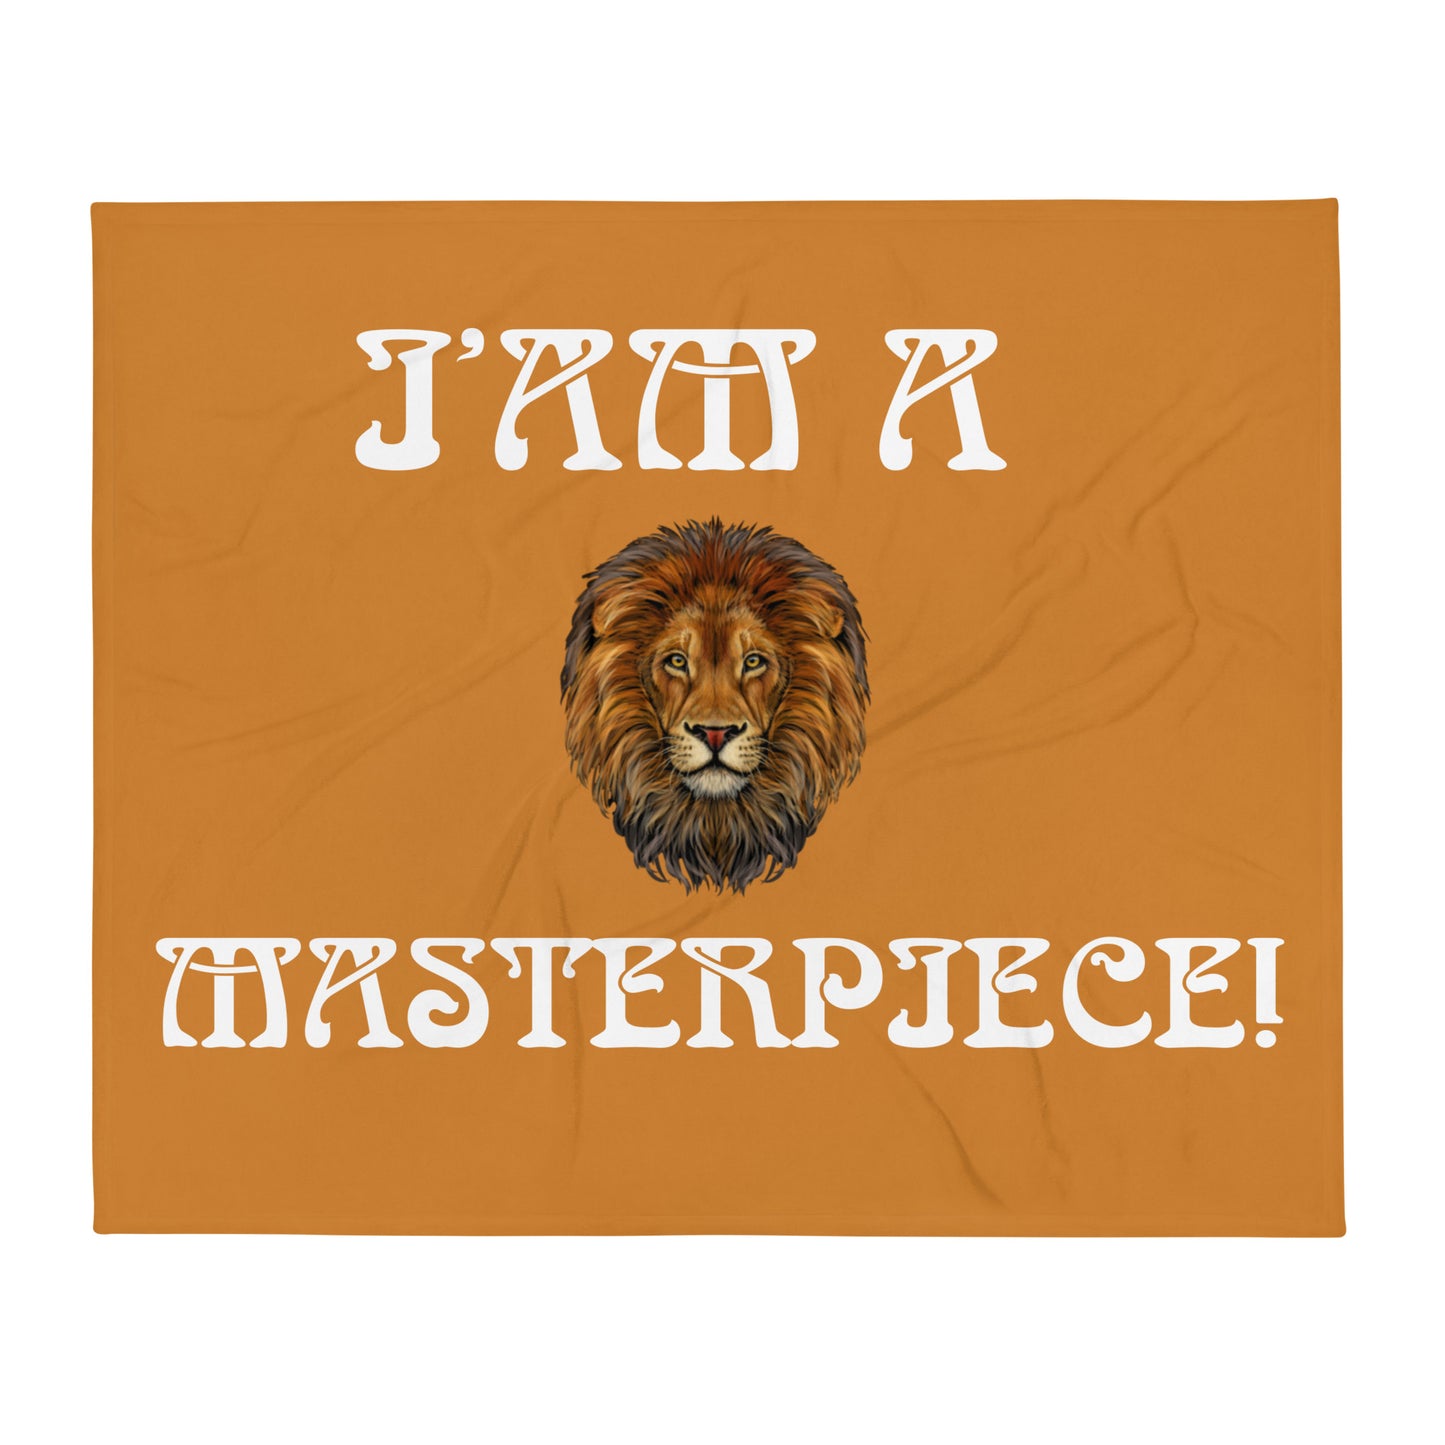 “I’AM A MASTERPIECE!”Bronze Throw Blanket W/White Font